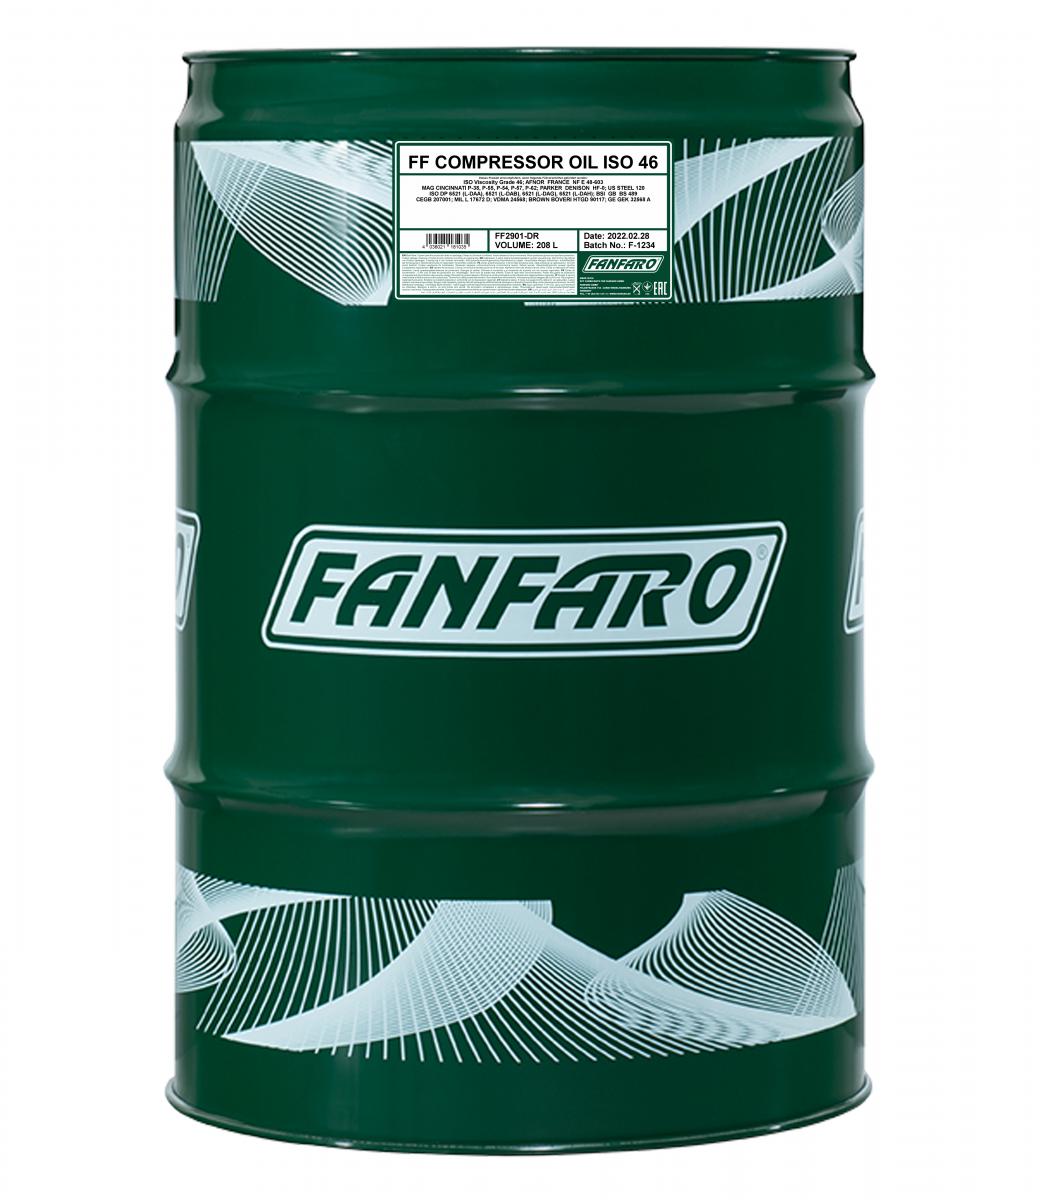 FANFARO COMRESSOR OIL ISO 46